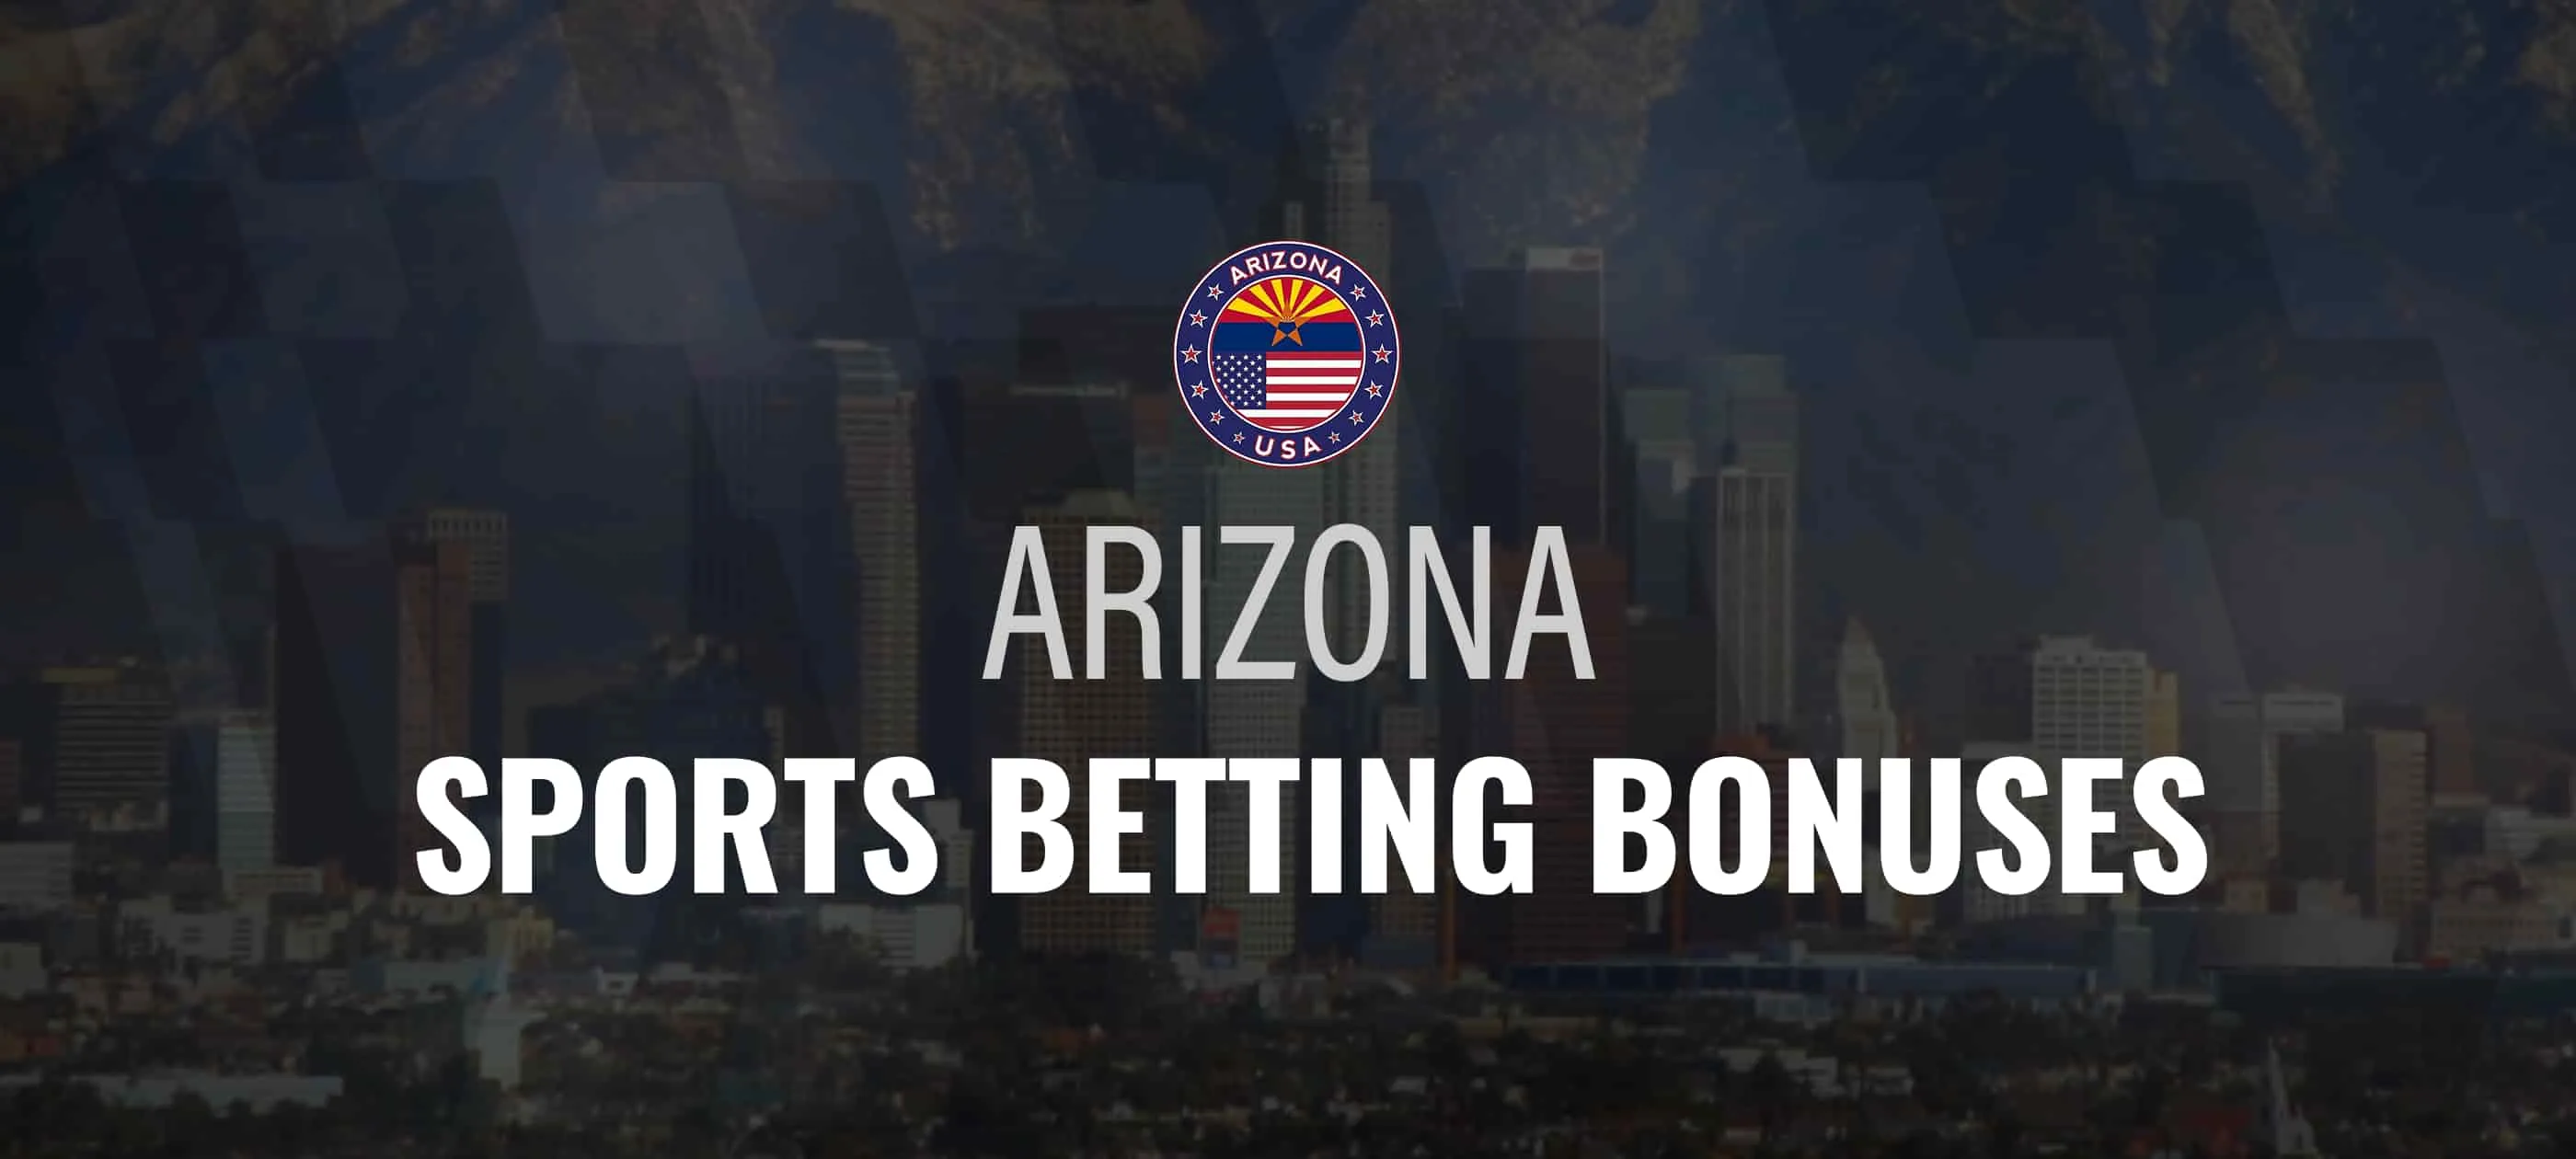 Arizona Sports Betting Bonuses